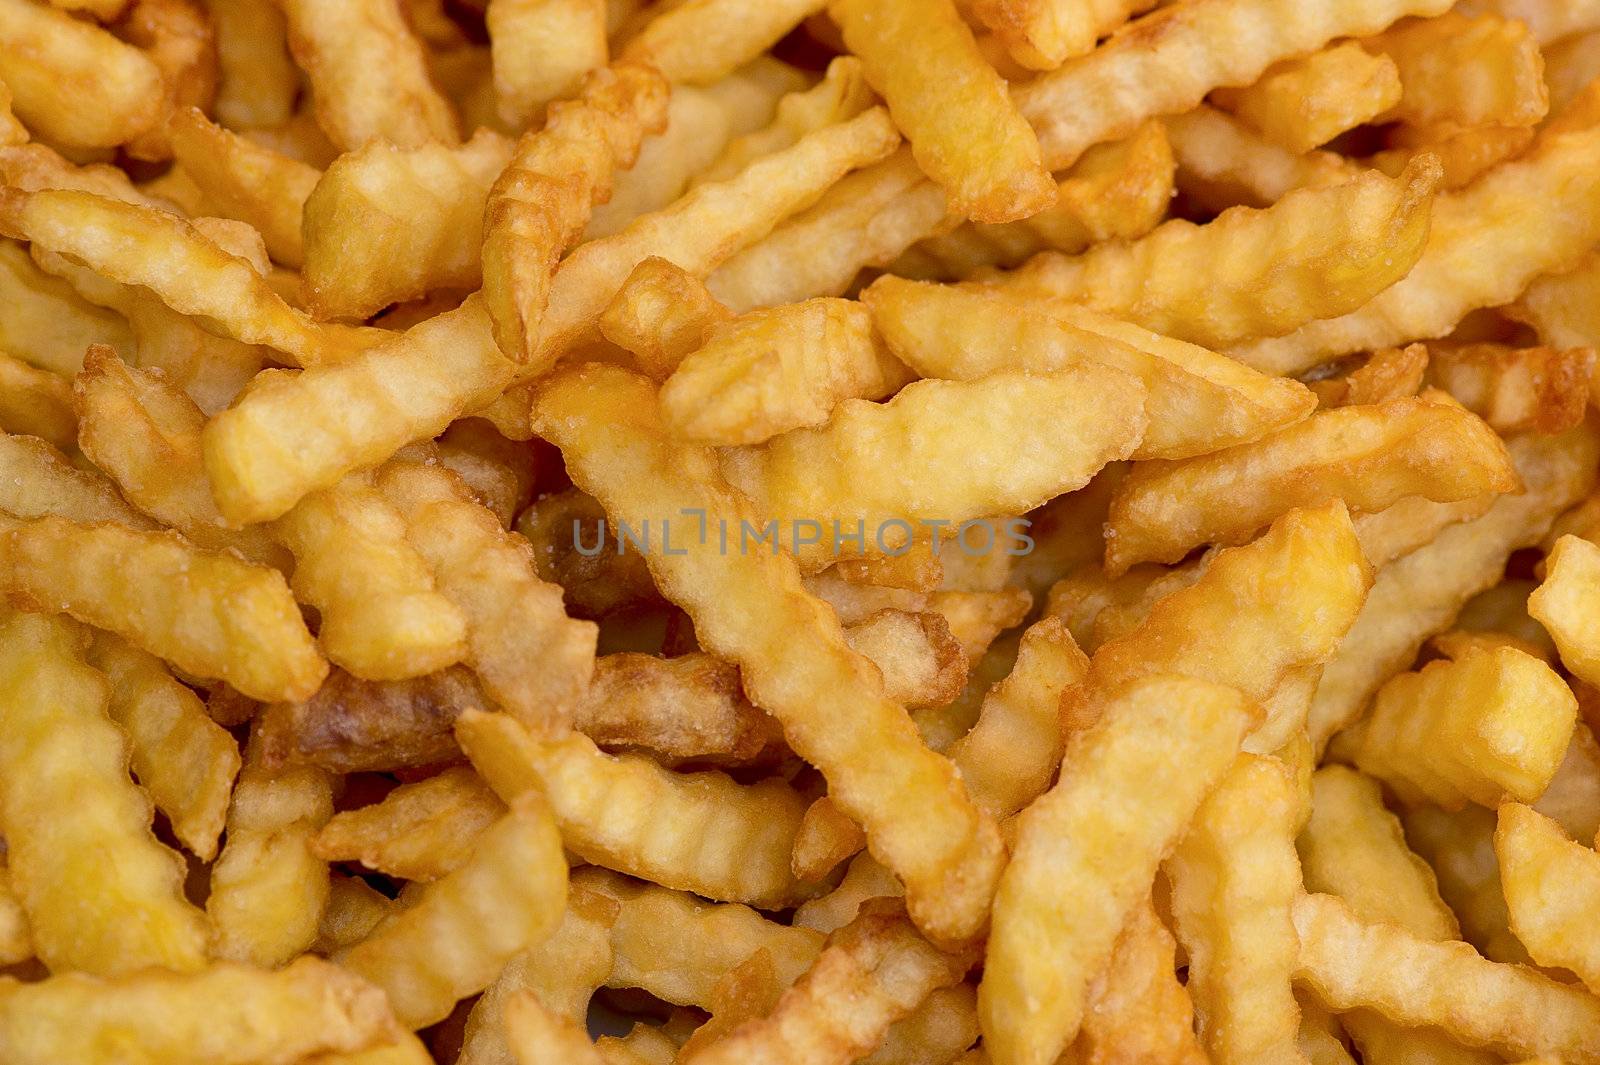 Fries by Kamensky